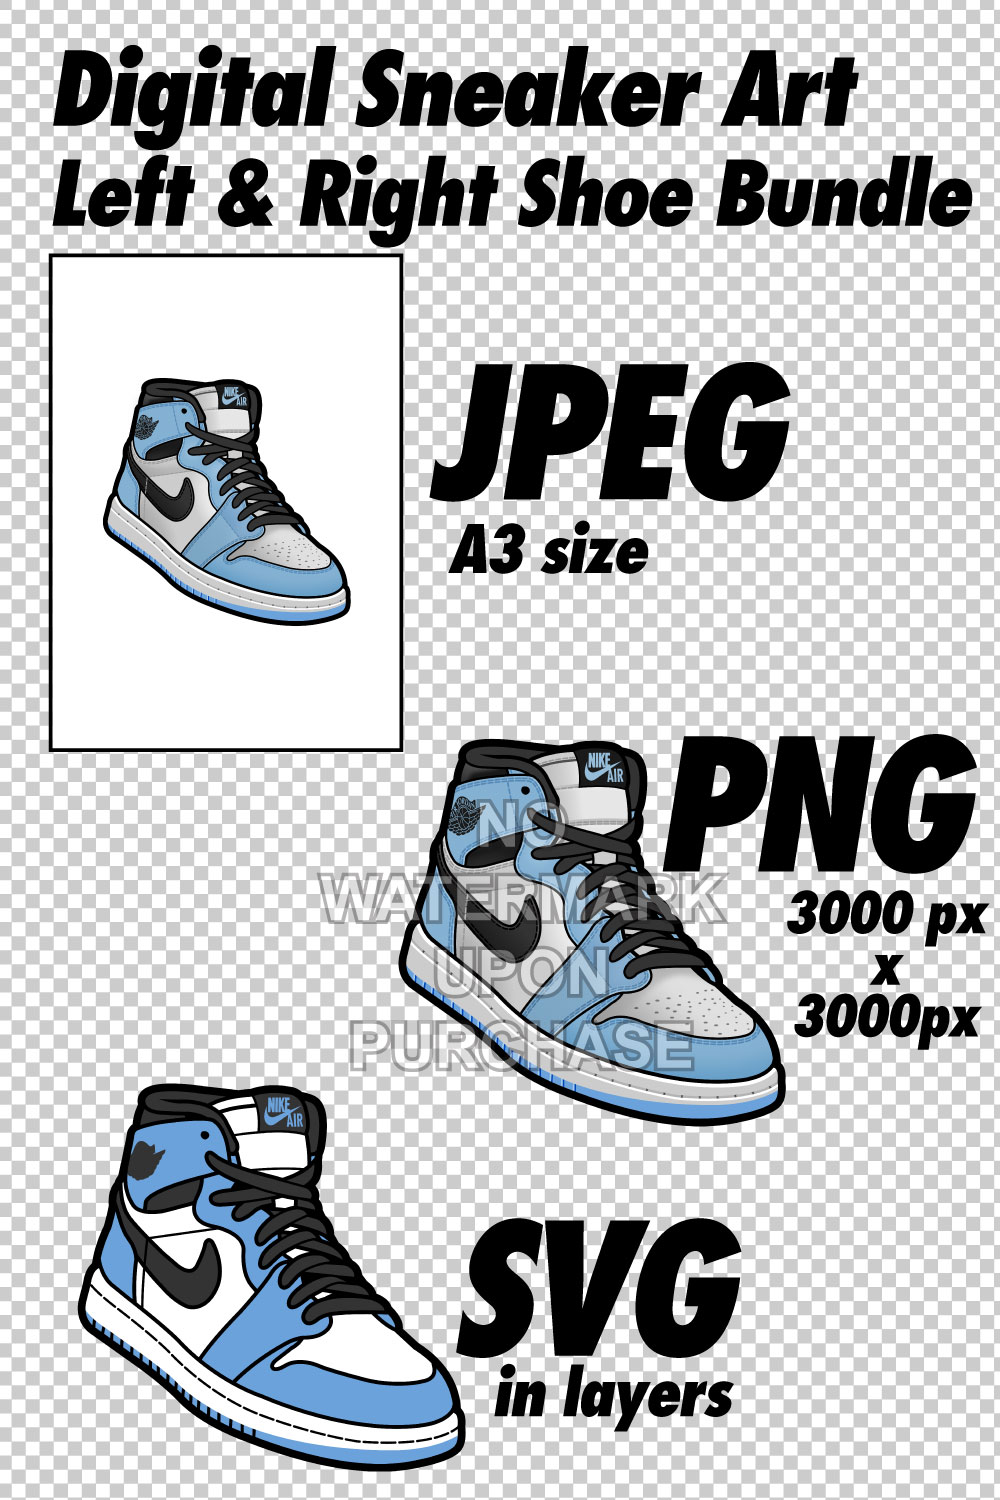 Air Jordan 1 University Blue JPEG PNG SVG Sneaker Art right & left shoe bundle Digital Download pinterest preview image.